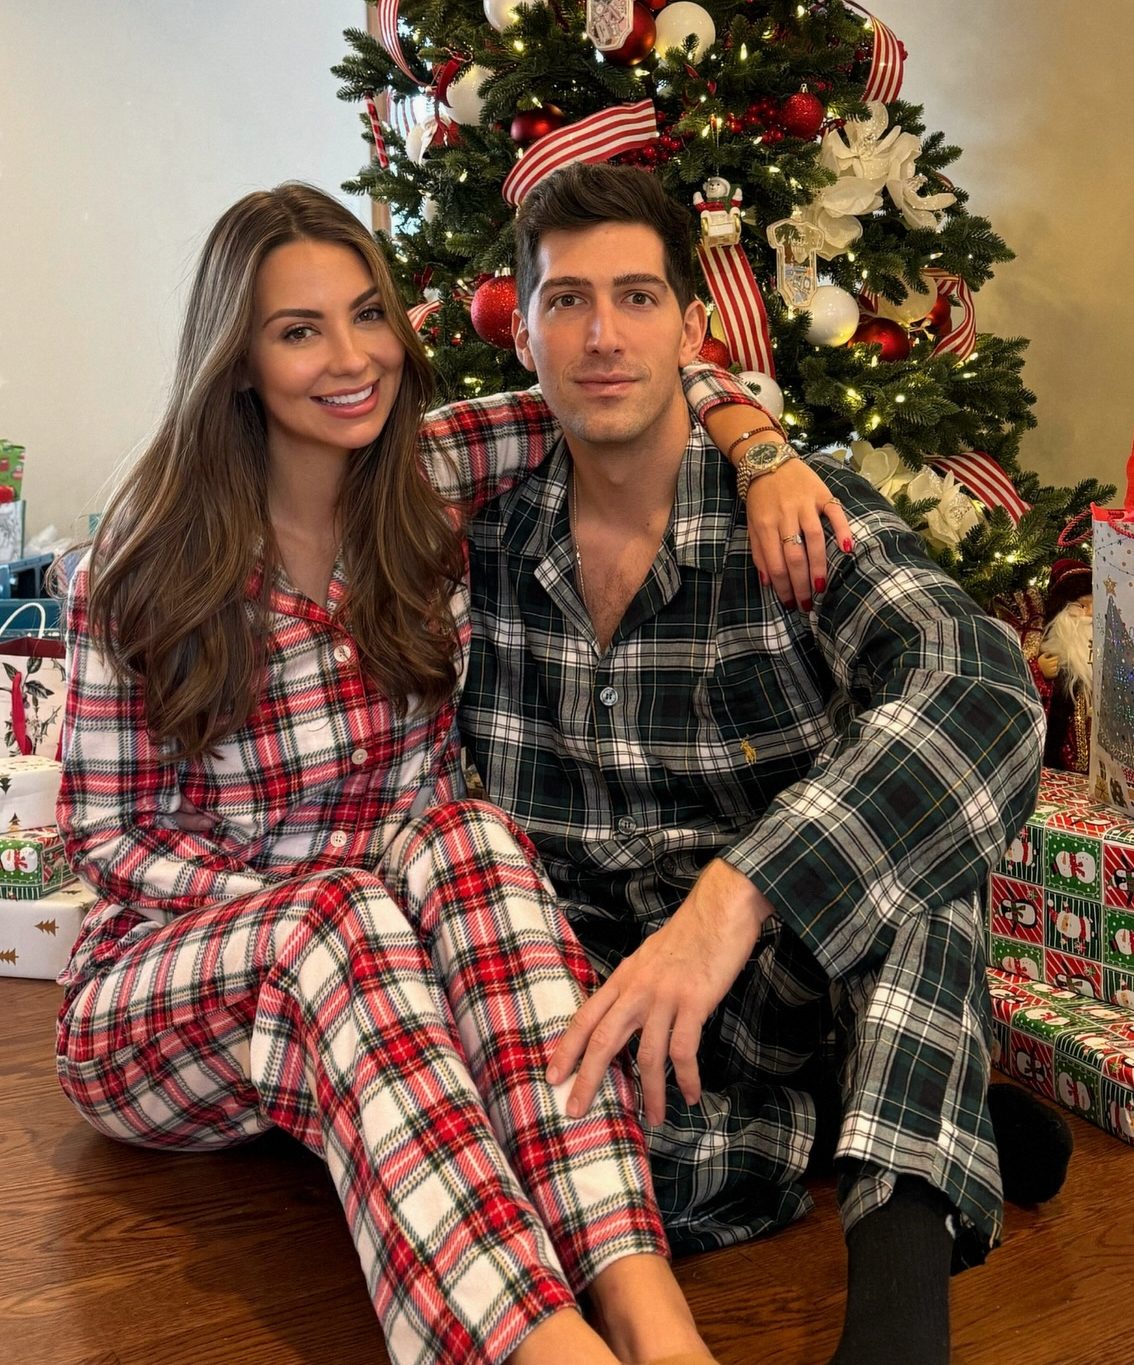 Kelley Flanagan ‘Can’t Get Over’ Boyfriend Ari Raptis' Christmas Gift